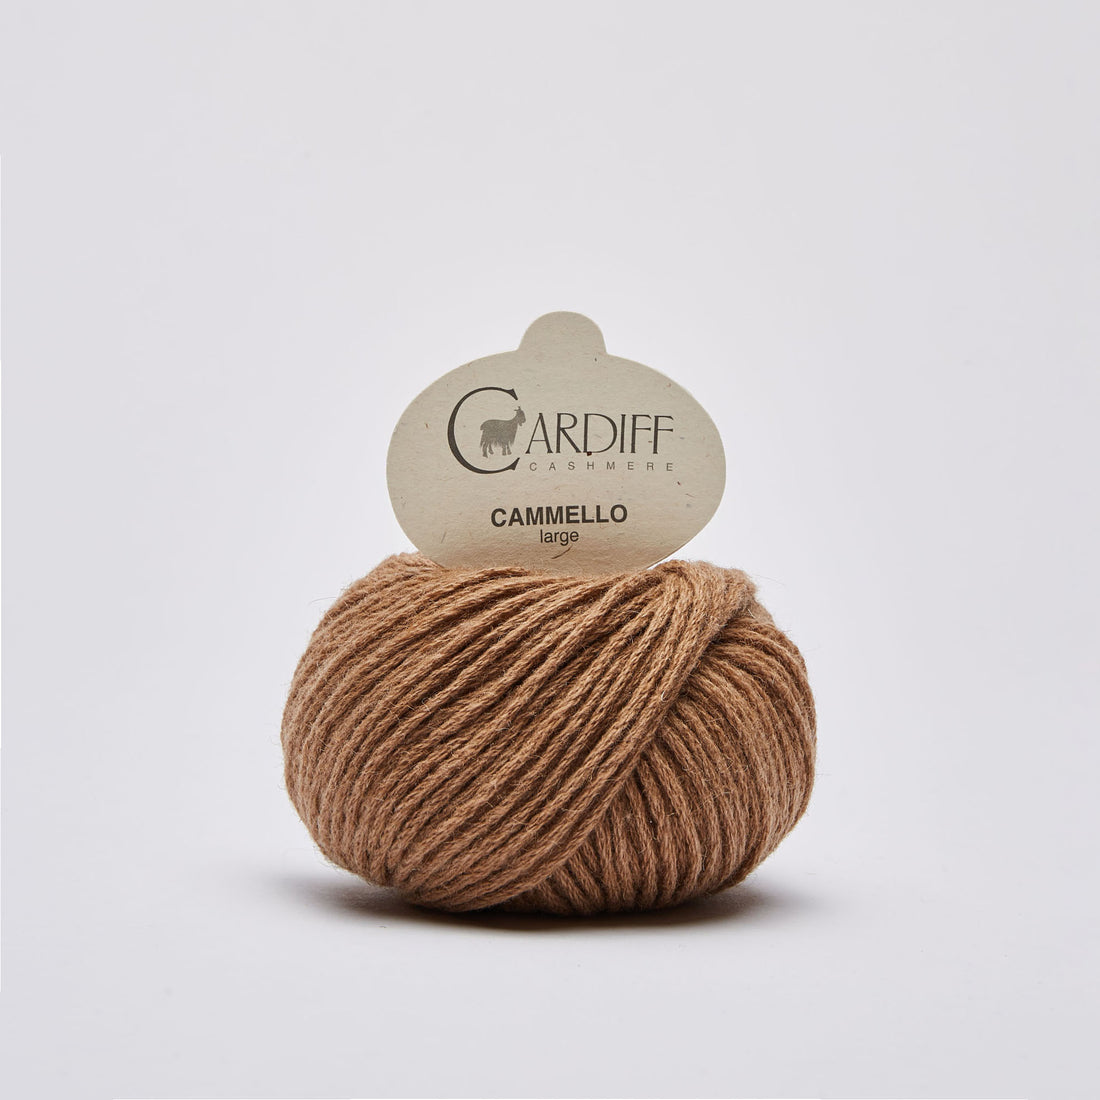 Cardiff CAMMELLO LARGE gentle yarn natural color comp: 100% Camel Fiber